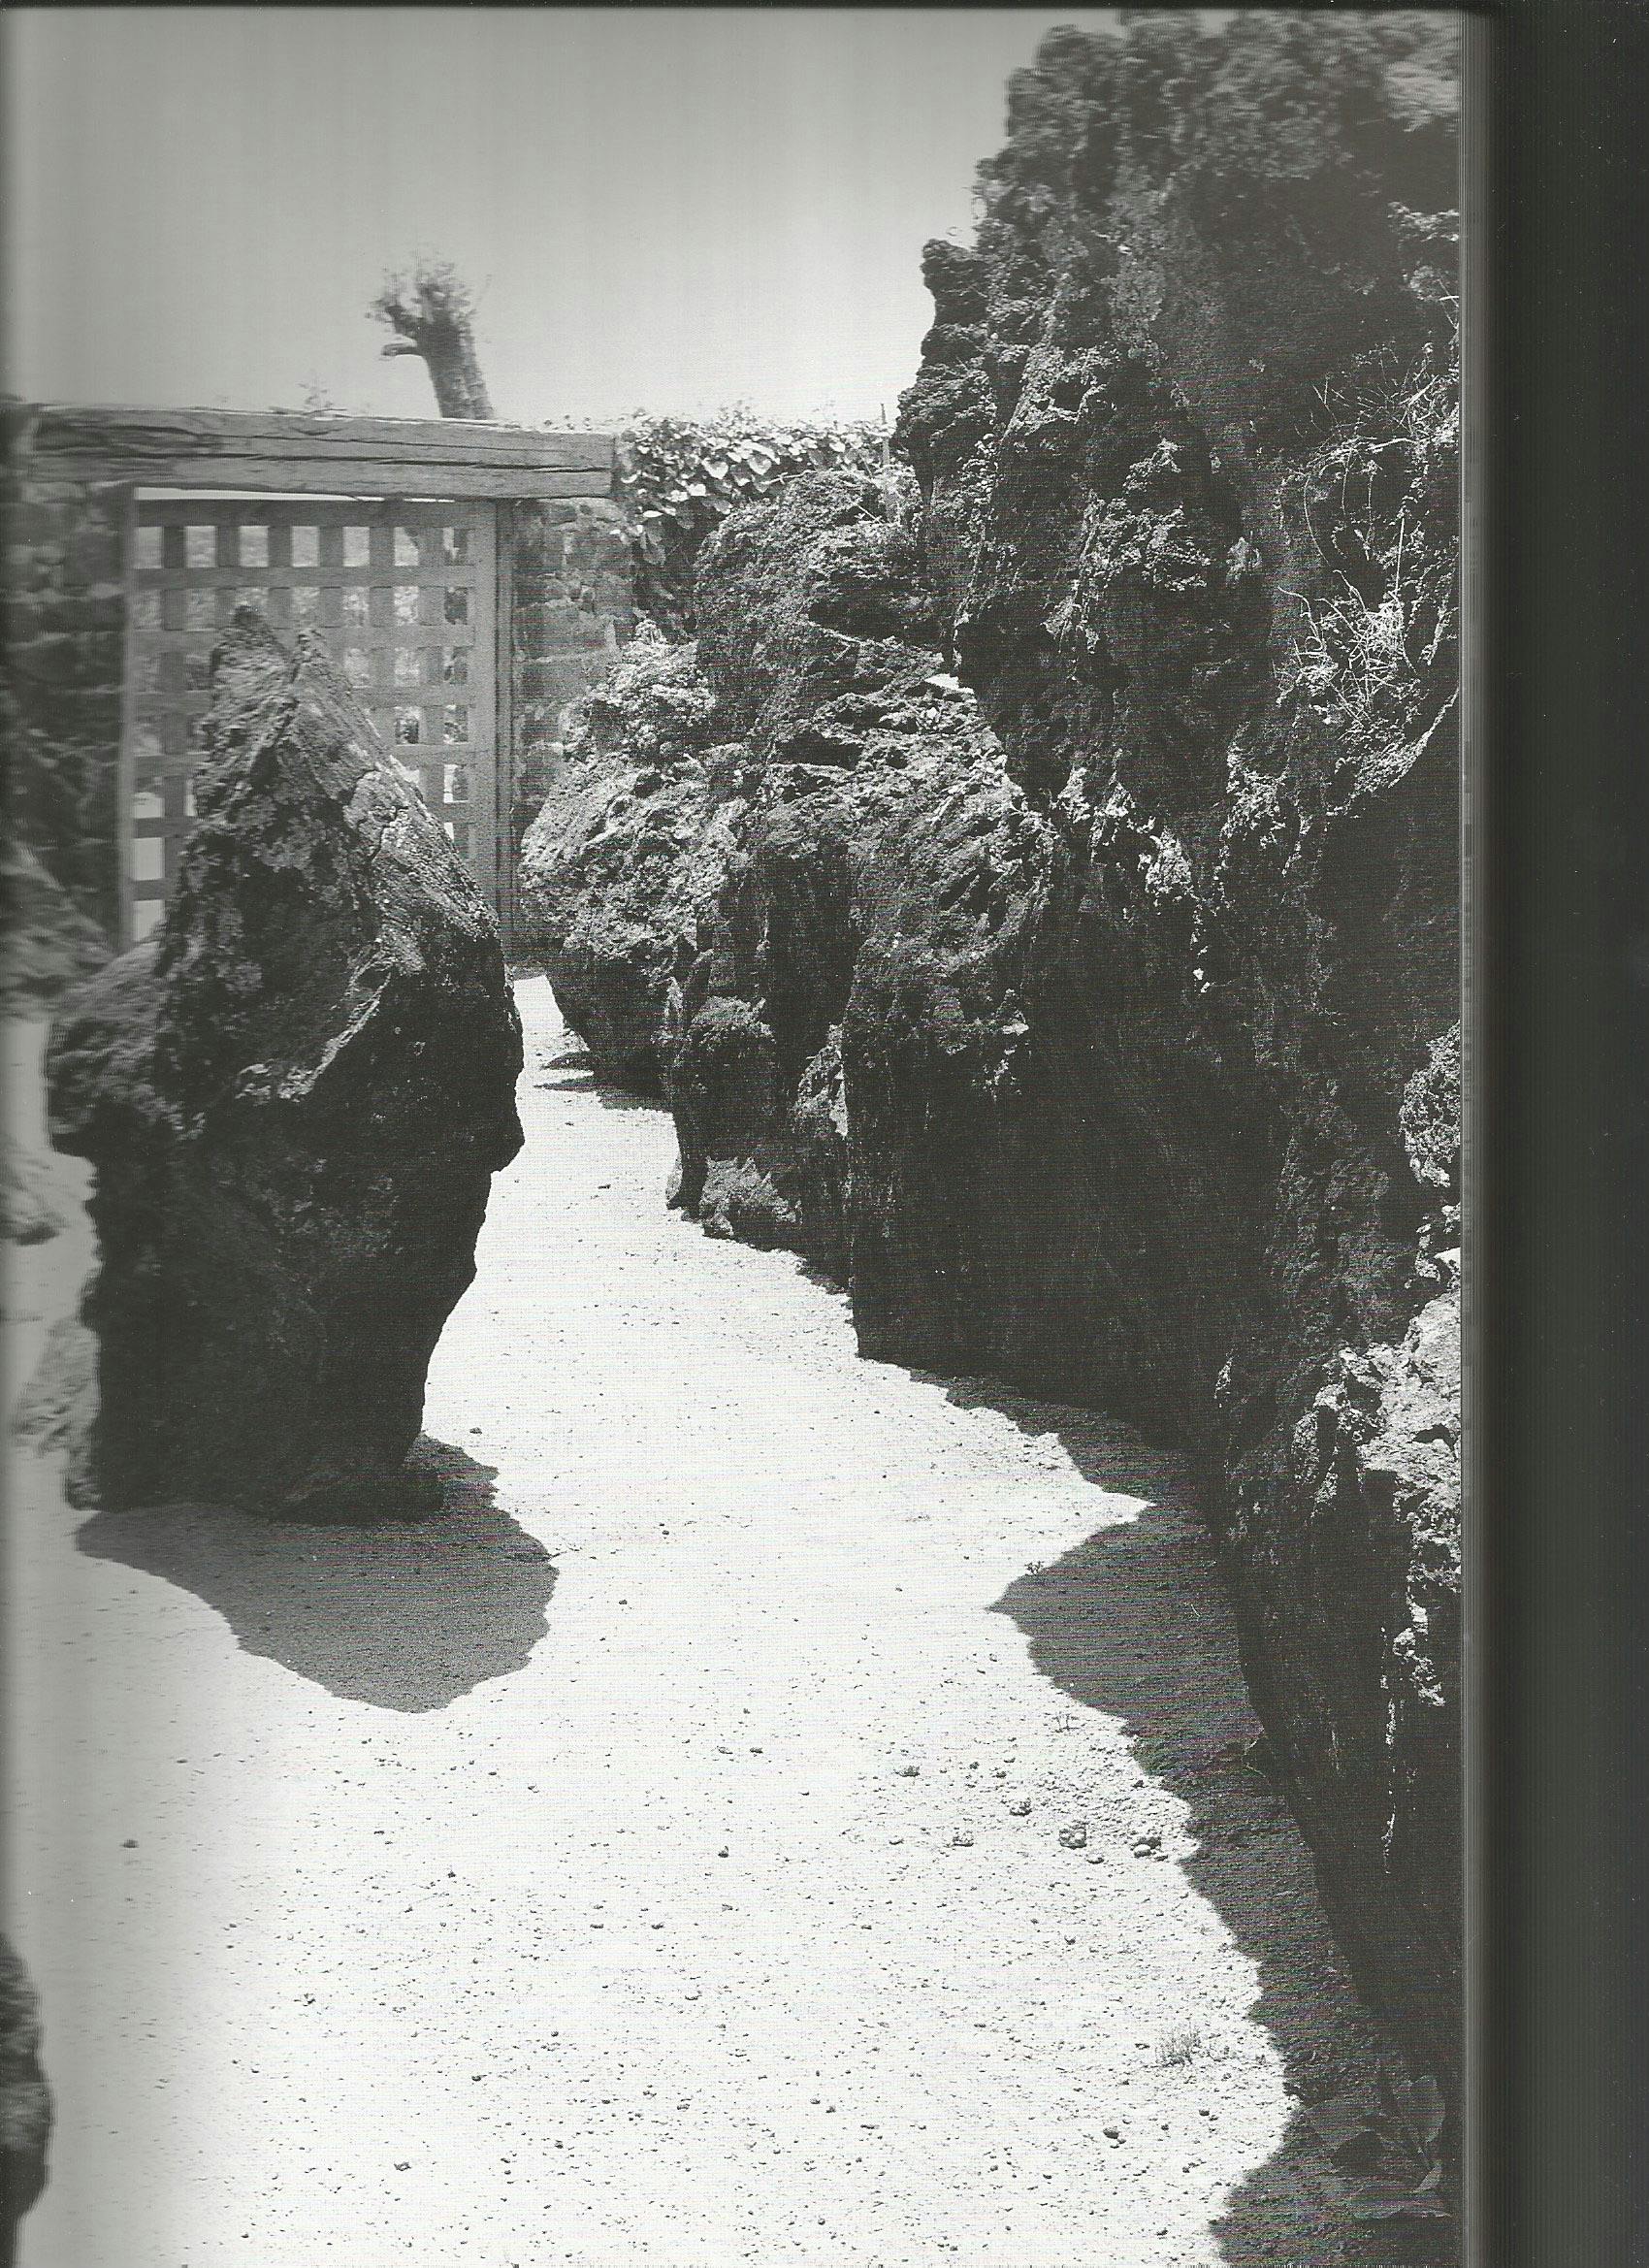 Armando Salas Portugal Photographs Moder Architecture of Mexico Vol. 1 - Luis Barragan El Pedregal Gate with Lava Rock